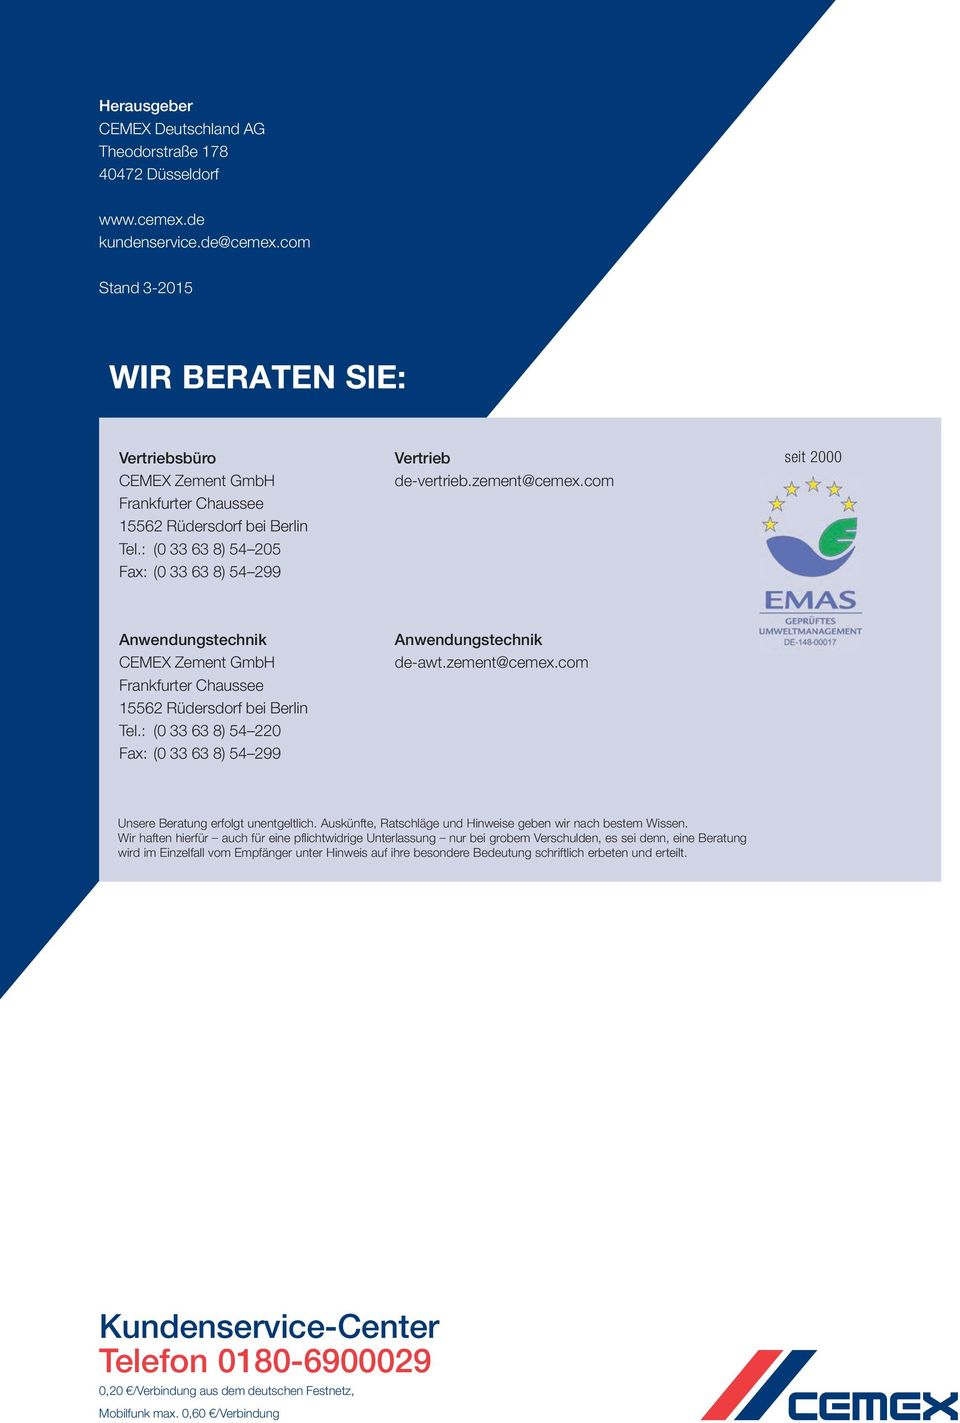 com seit 2000 Anwendungstechnik CEMEX Zement GmbH Frankfurter Chaussee 15562 Rüdersdorf bei Berlin Tel.: (0 33 63 8) 54 220 Fax: (0 33 63 8) 54 299 Anwendungstechnik de-awt.zement@cemex.